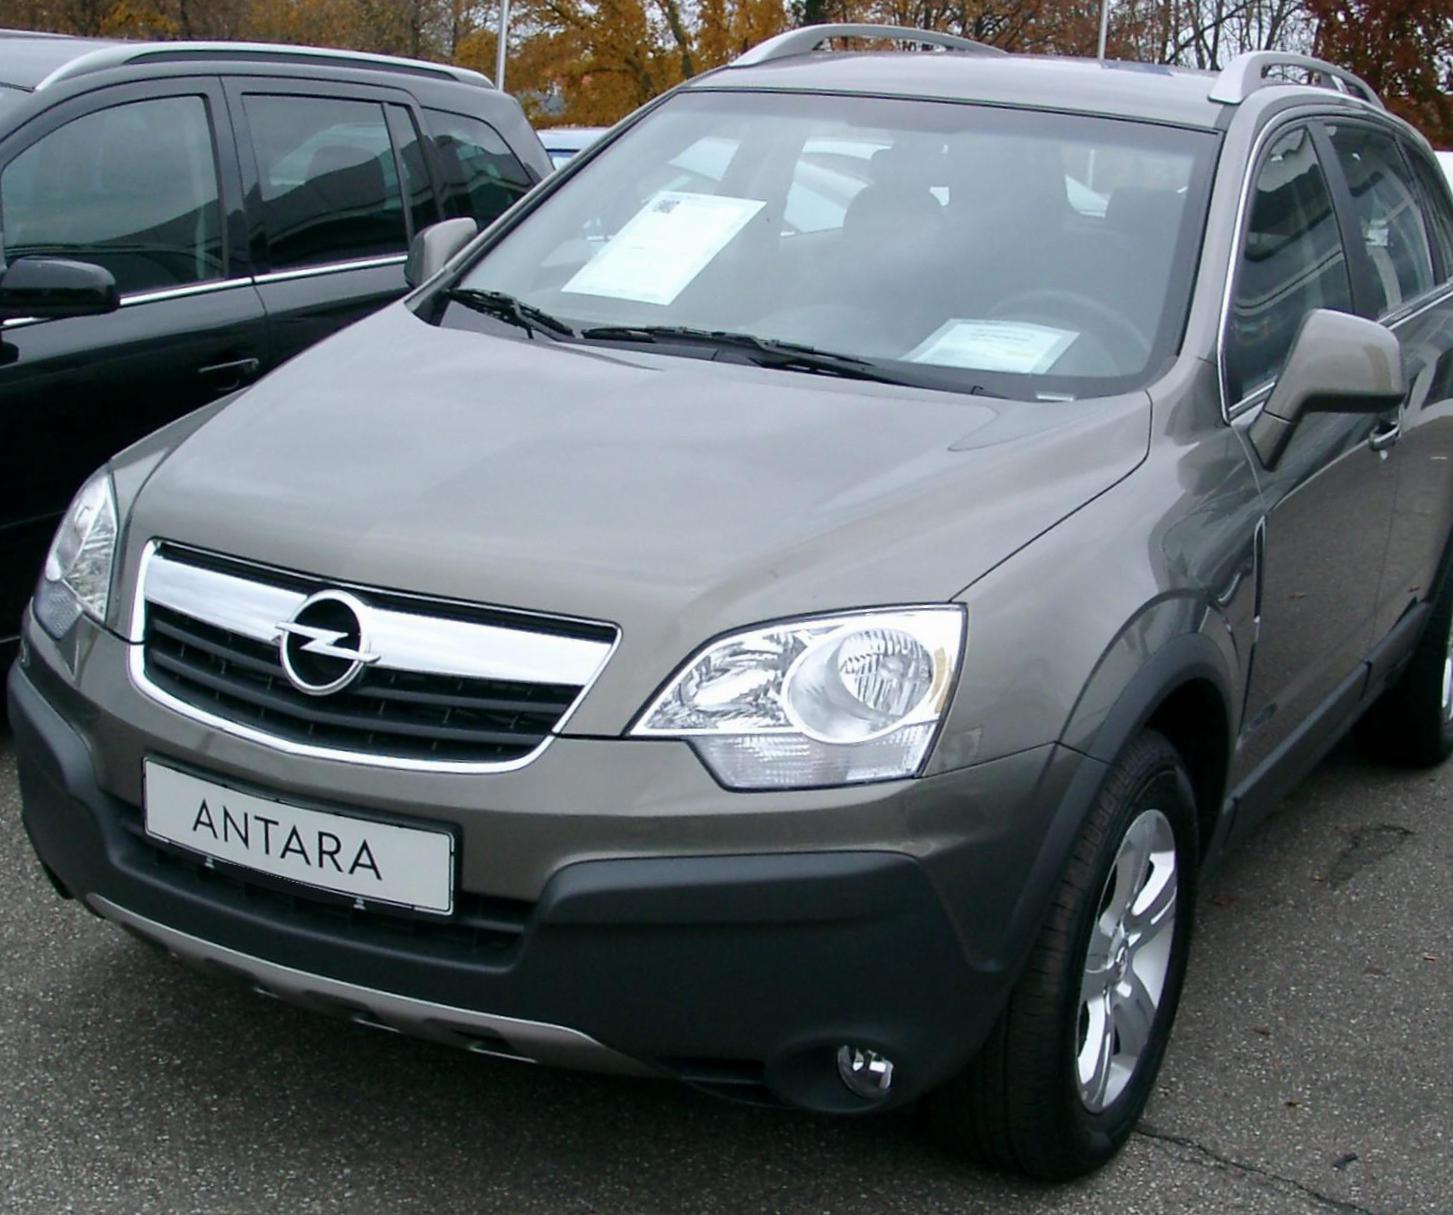 Antara Opel prices 2007